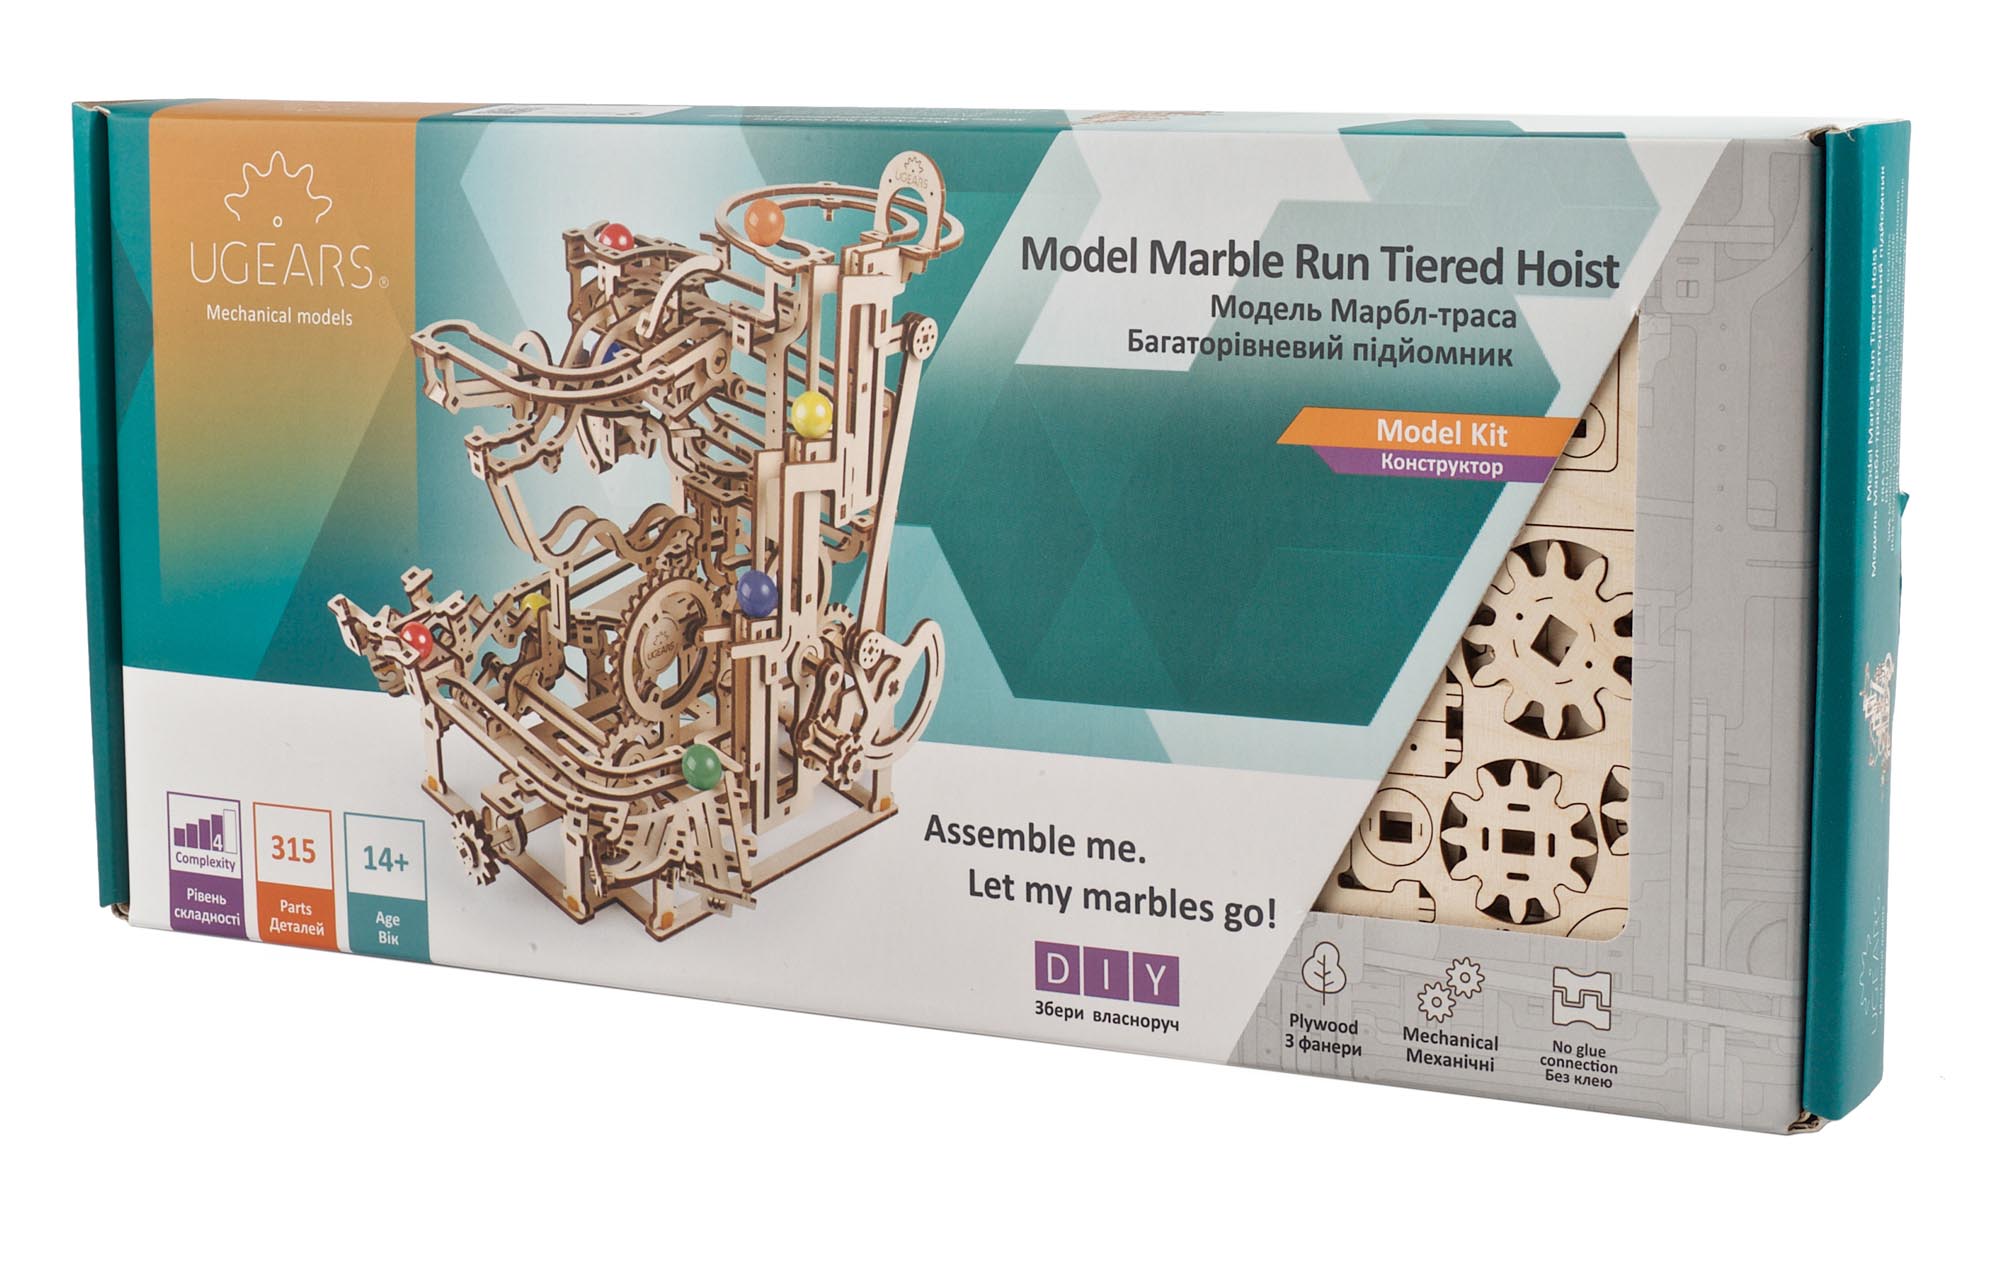 Shop Wooden Model Kits - Modelers Central - Fast Delivery